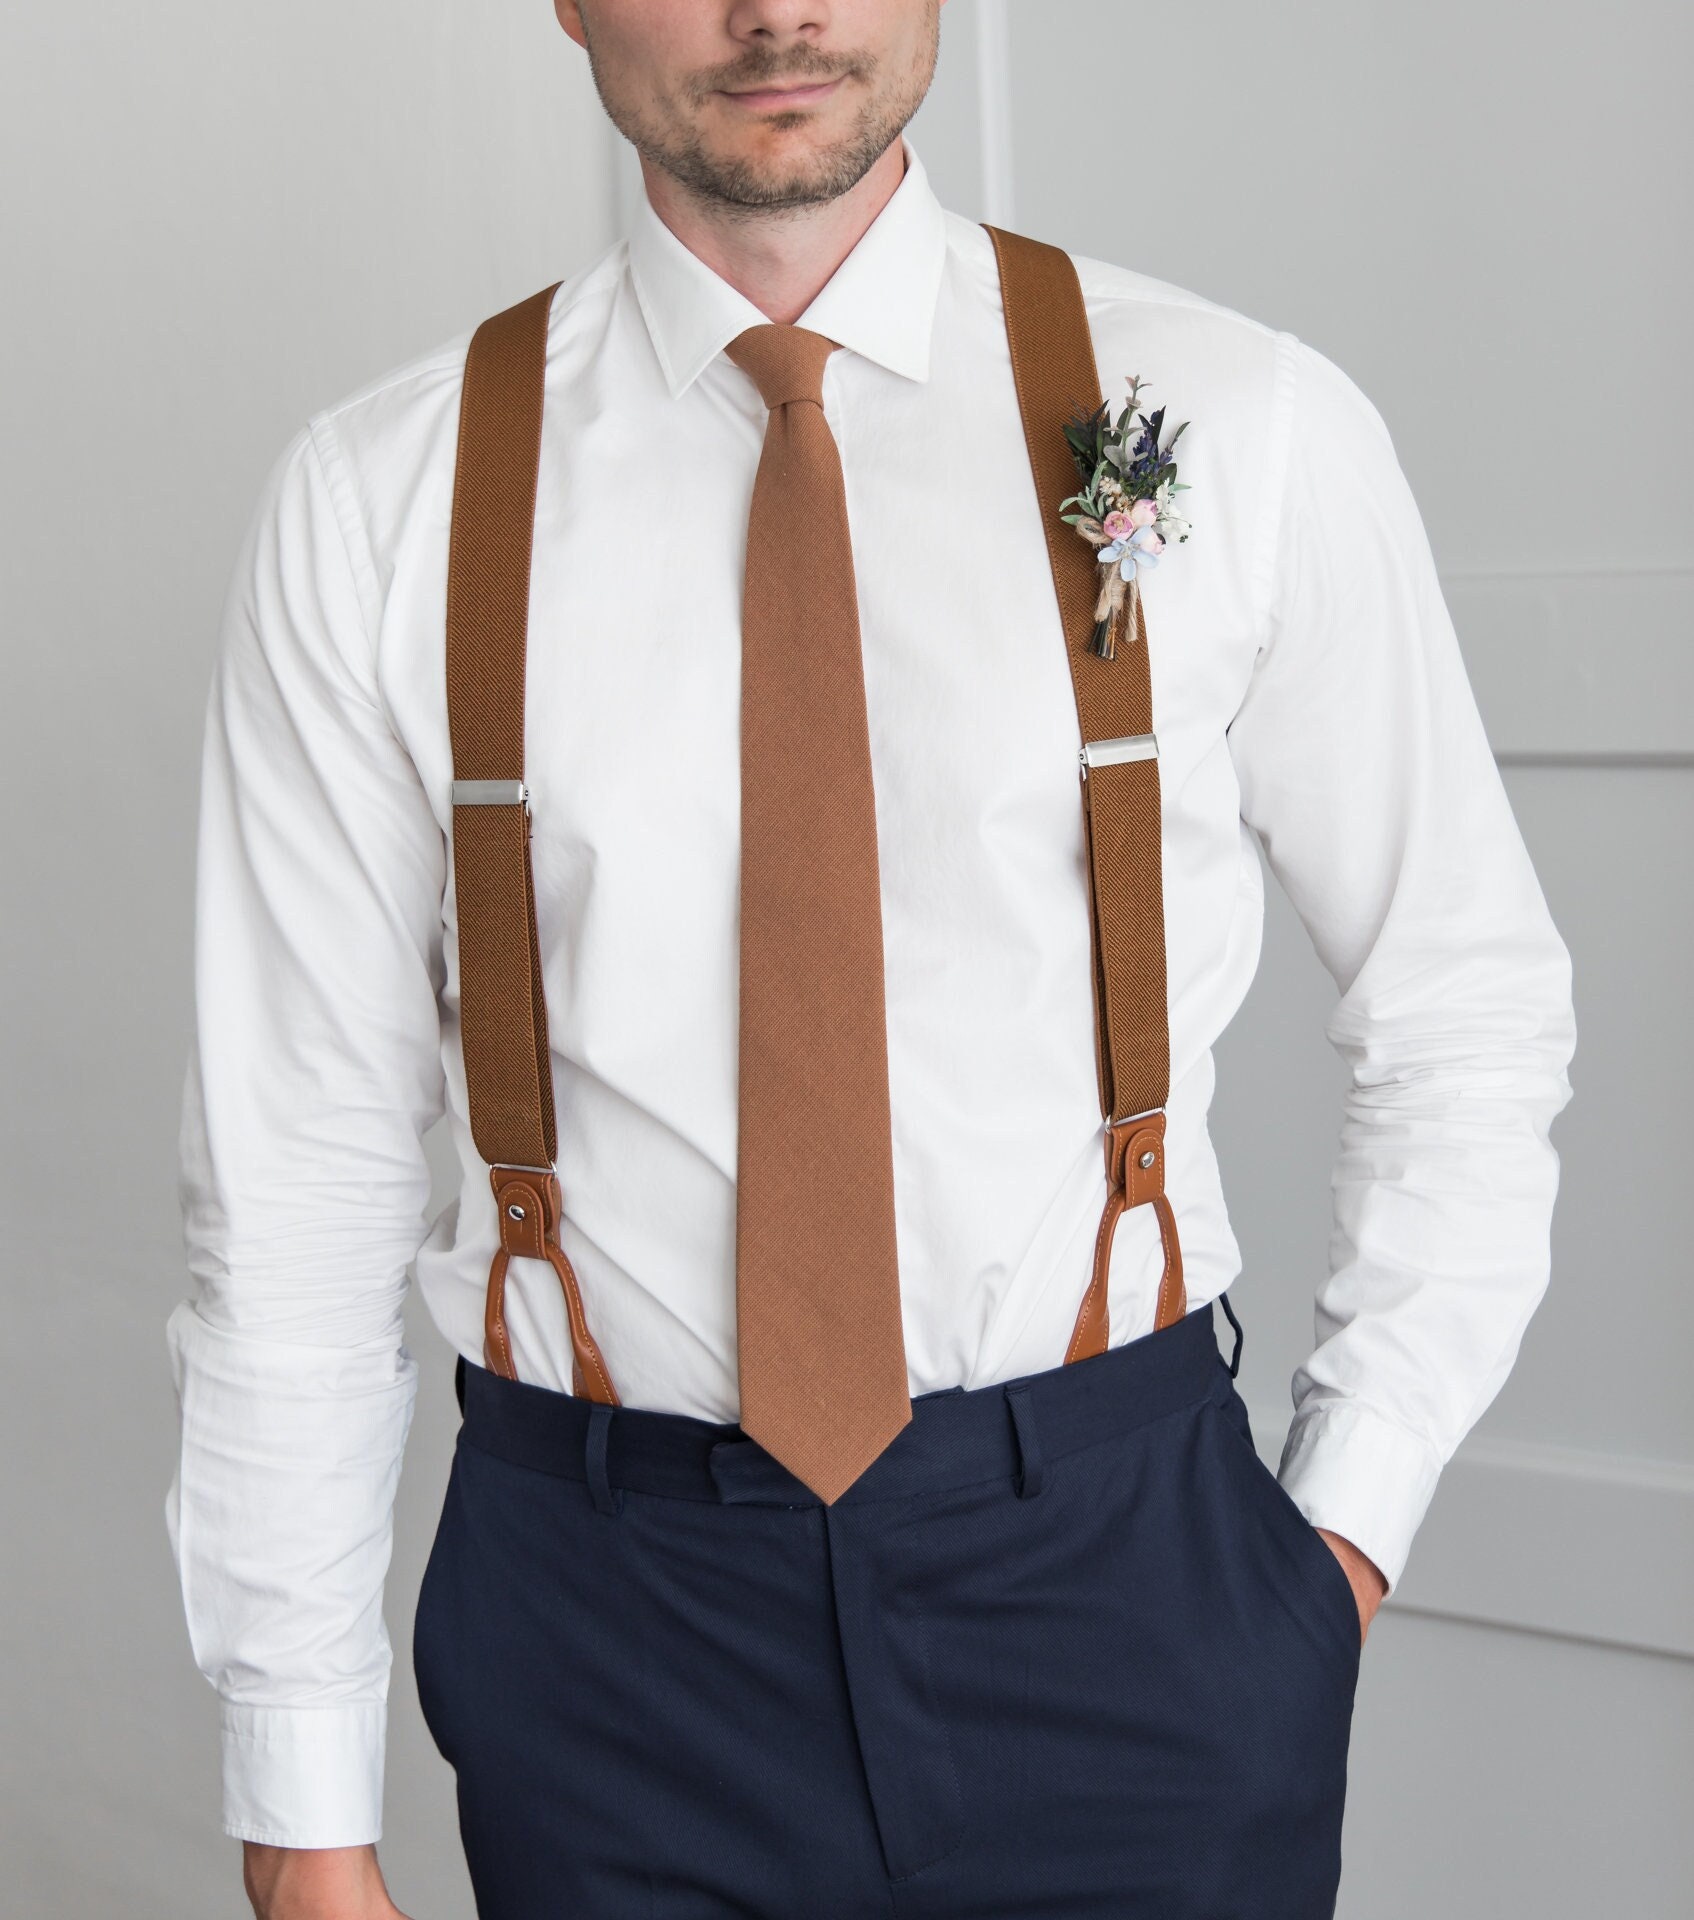 Brown Suspenders for Men Button Suspenders Wedding - Etsy